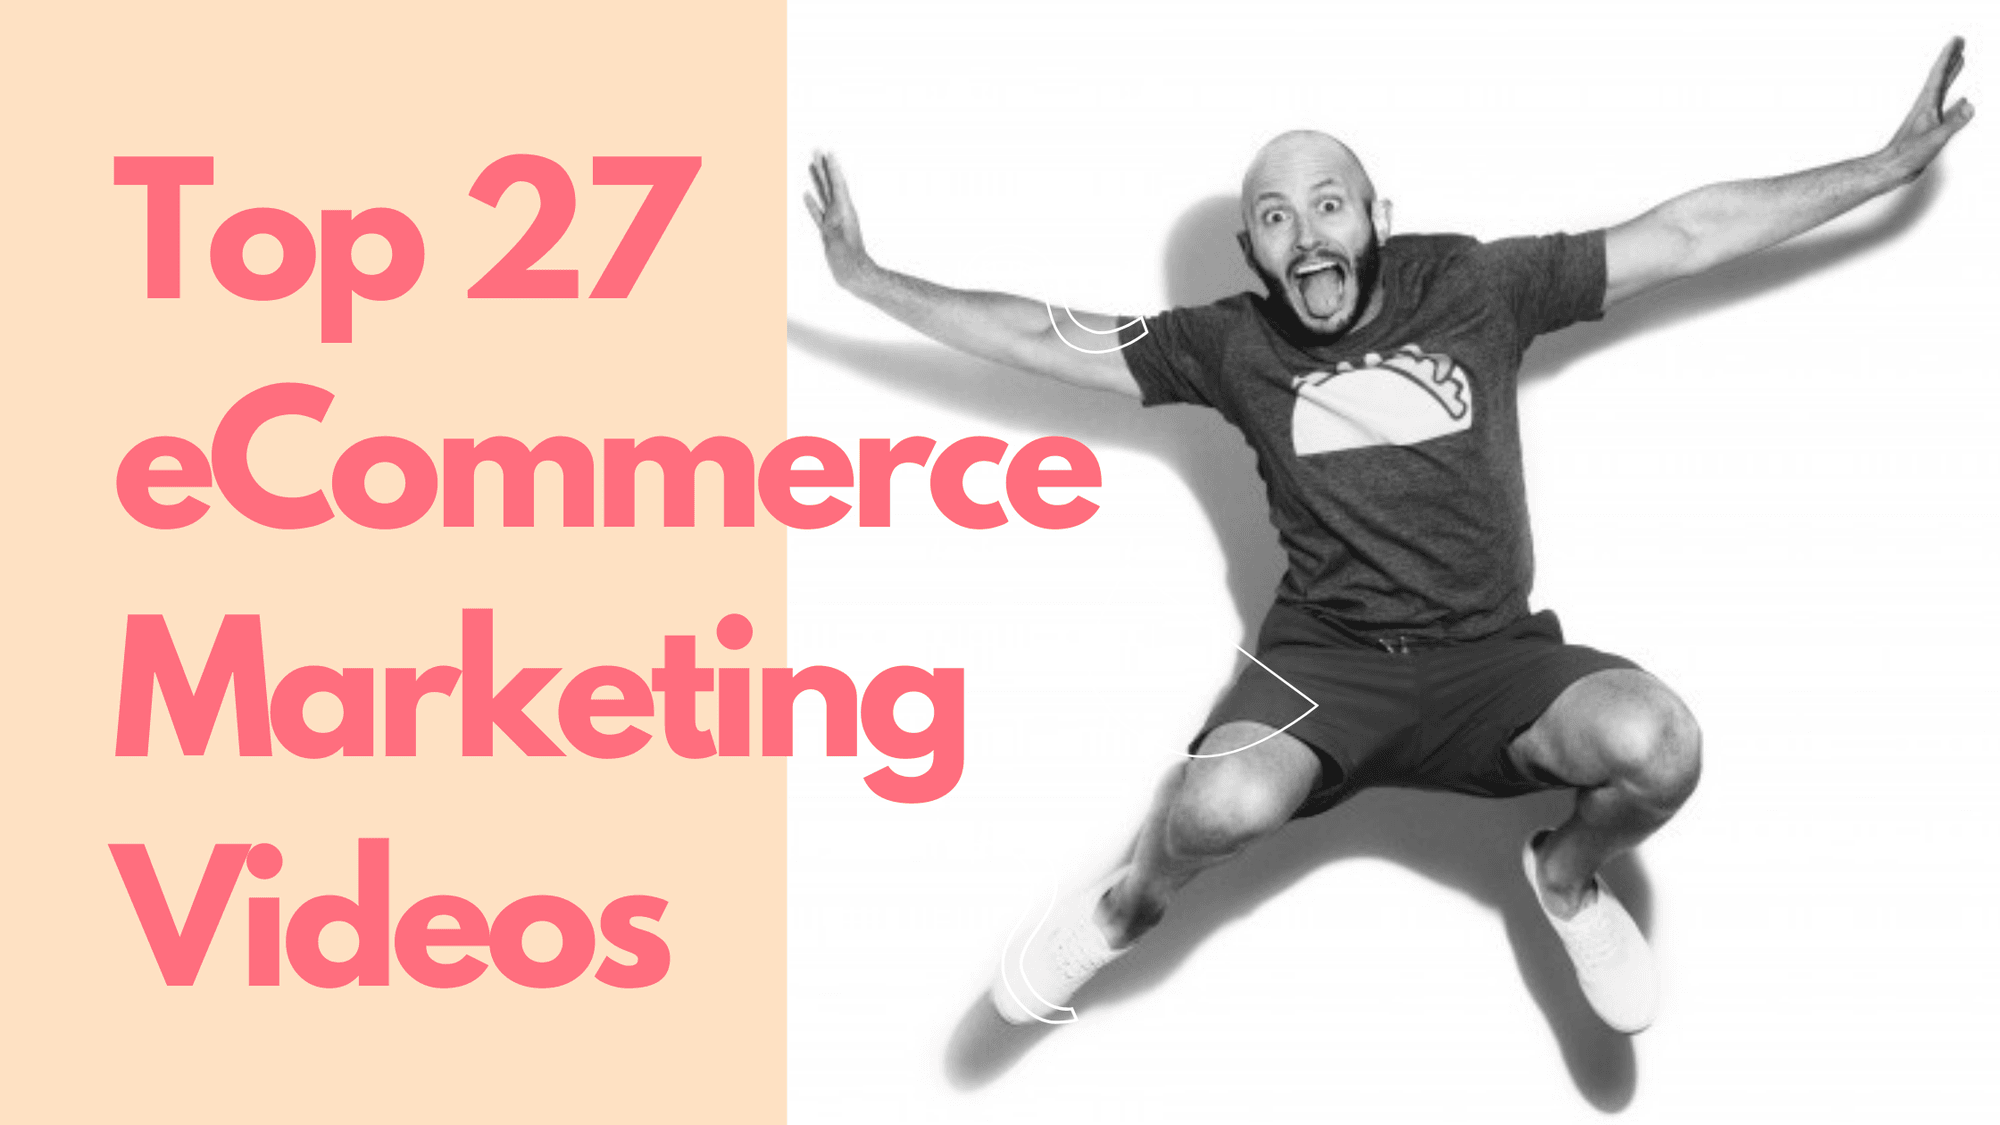 Top 27 eCommerce Marketing Videos main image